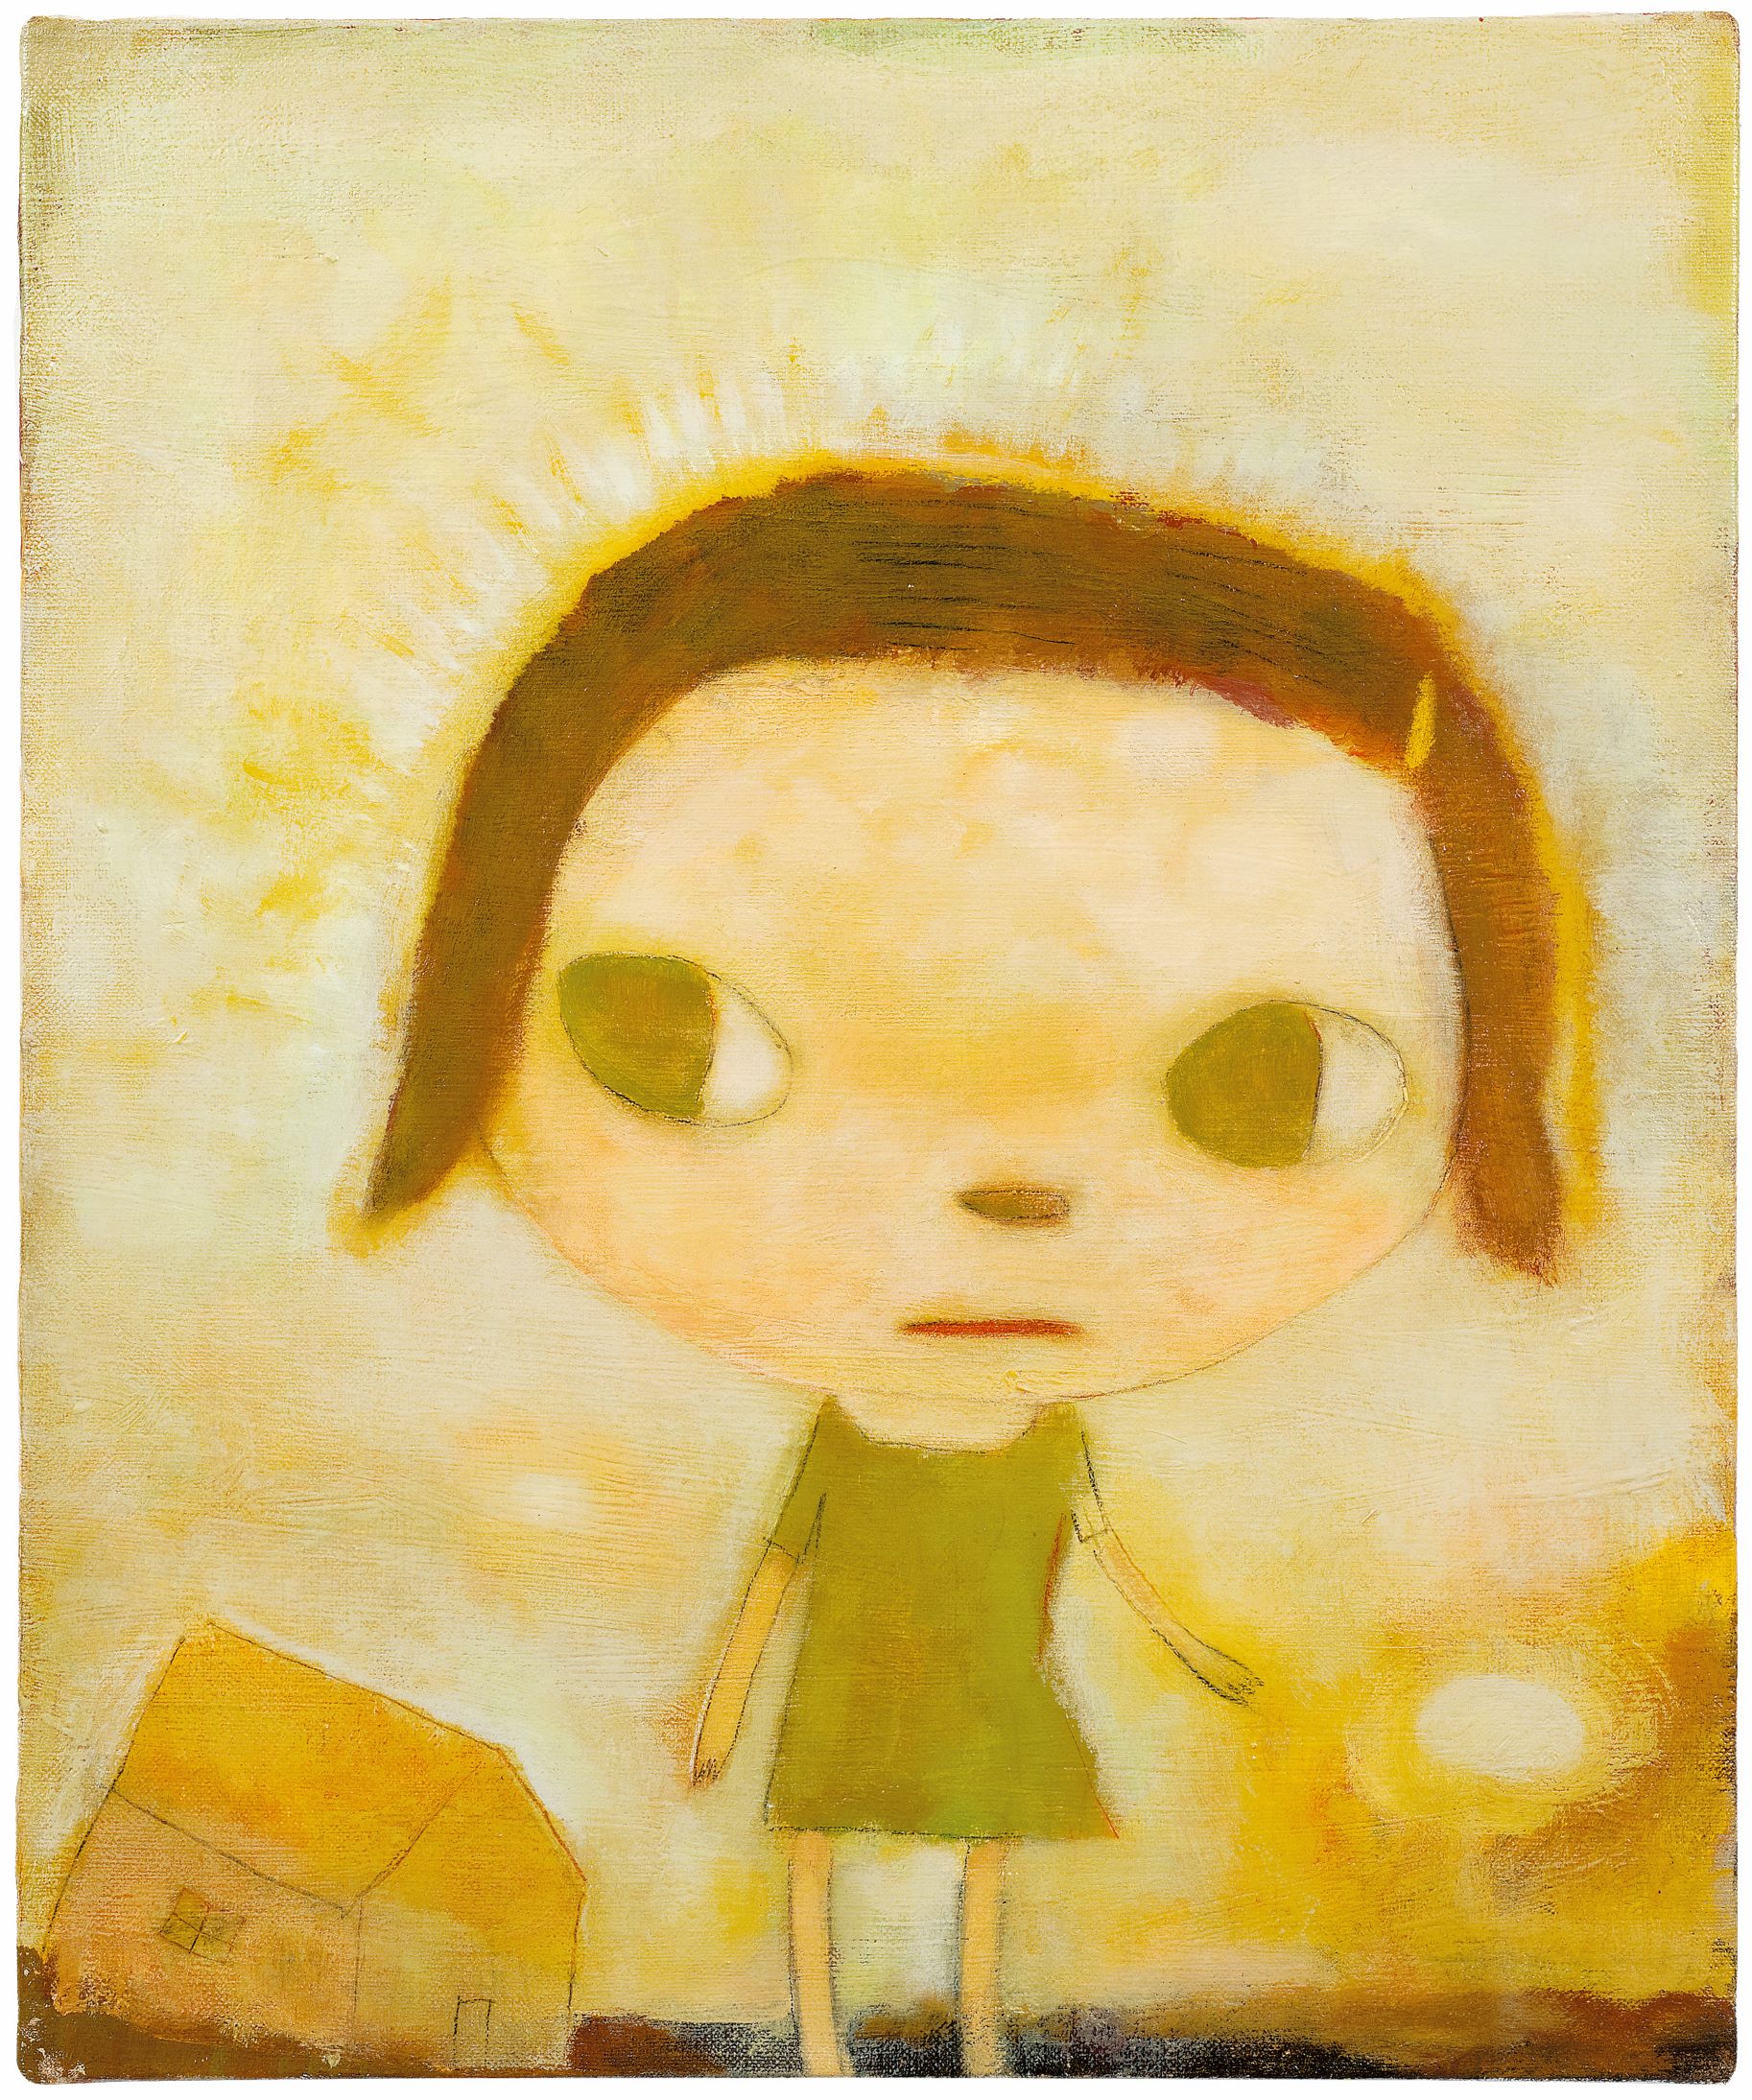 M.I.A., 2011, acrylic and pencil on canvas, 18 1/16 × 14 15/16 in. (45.8 × 38 cm). Artwork courtesy and © Yoshitomo Nara / photo: Kei Okano